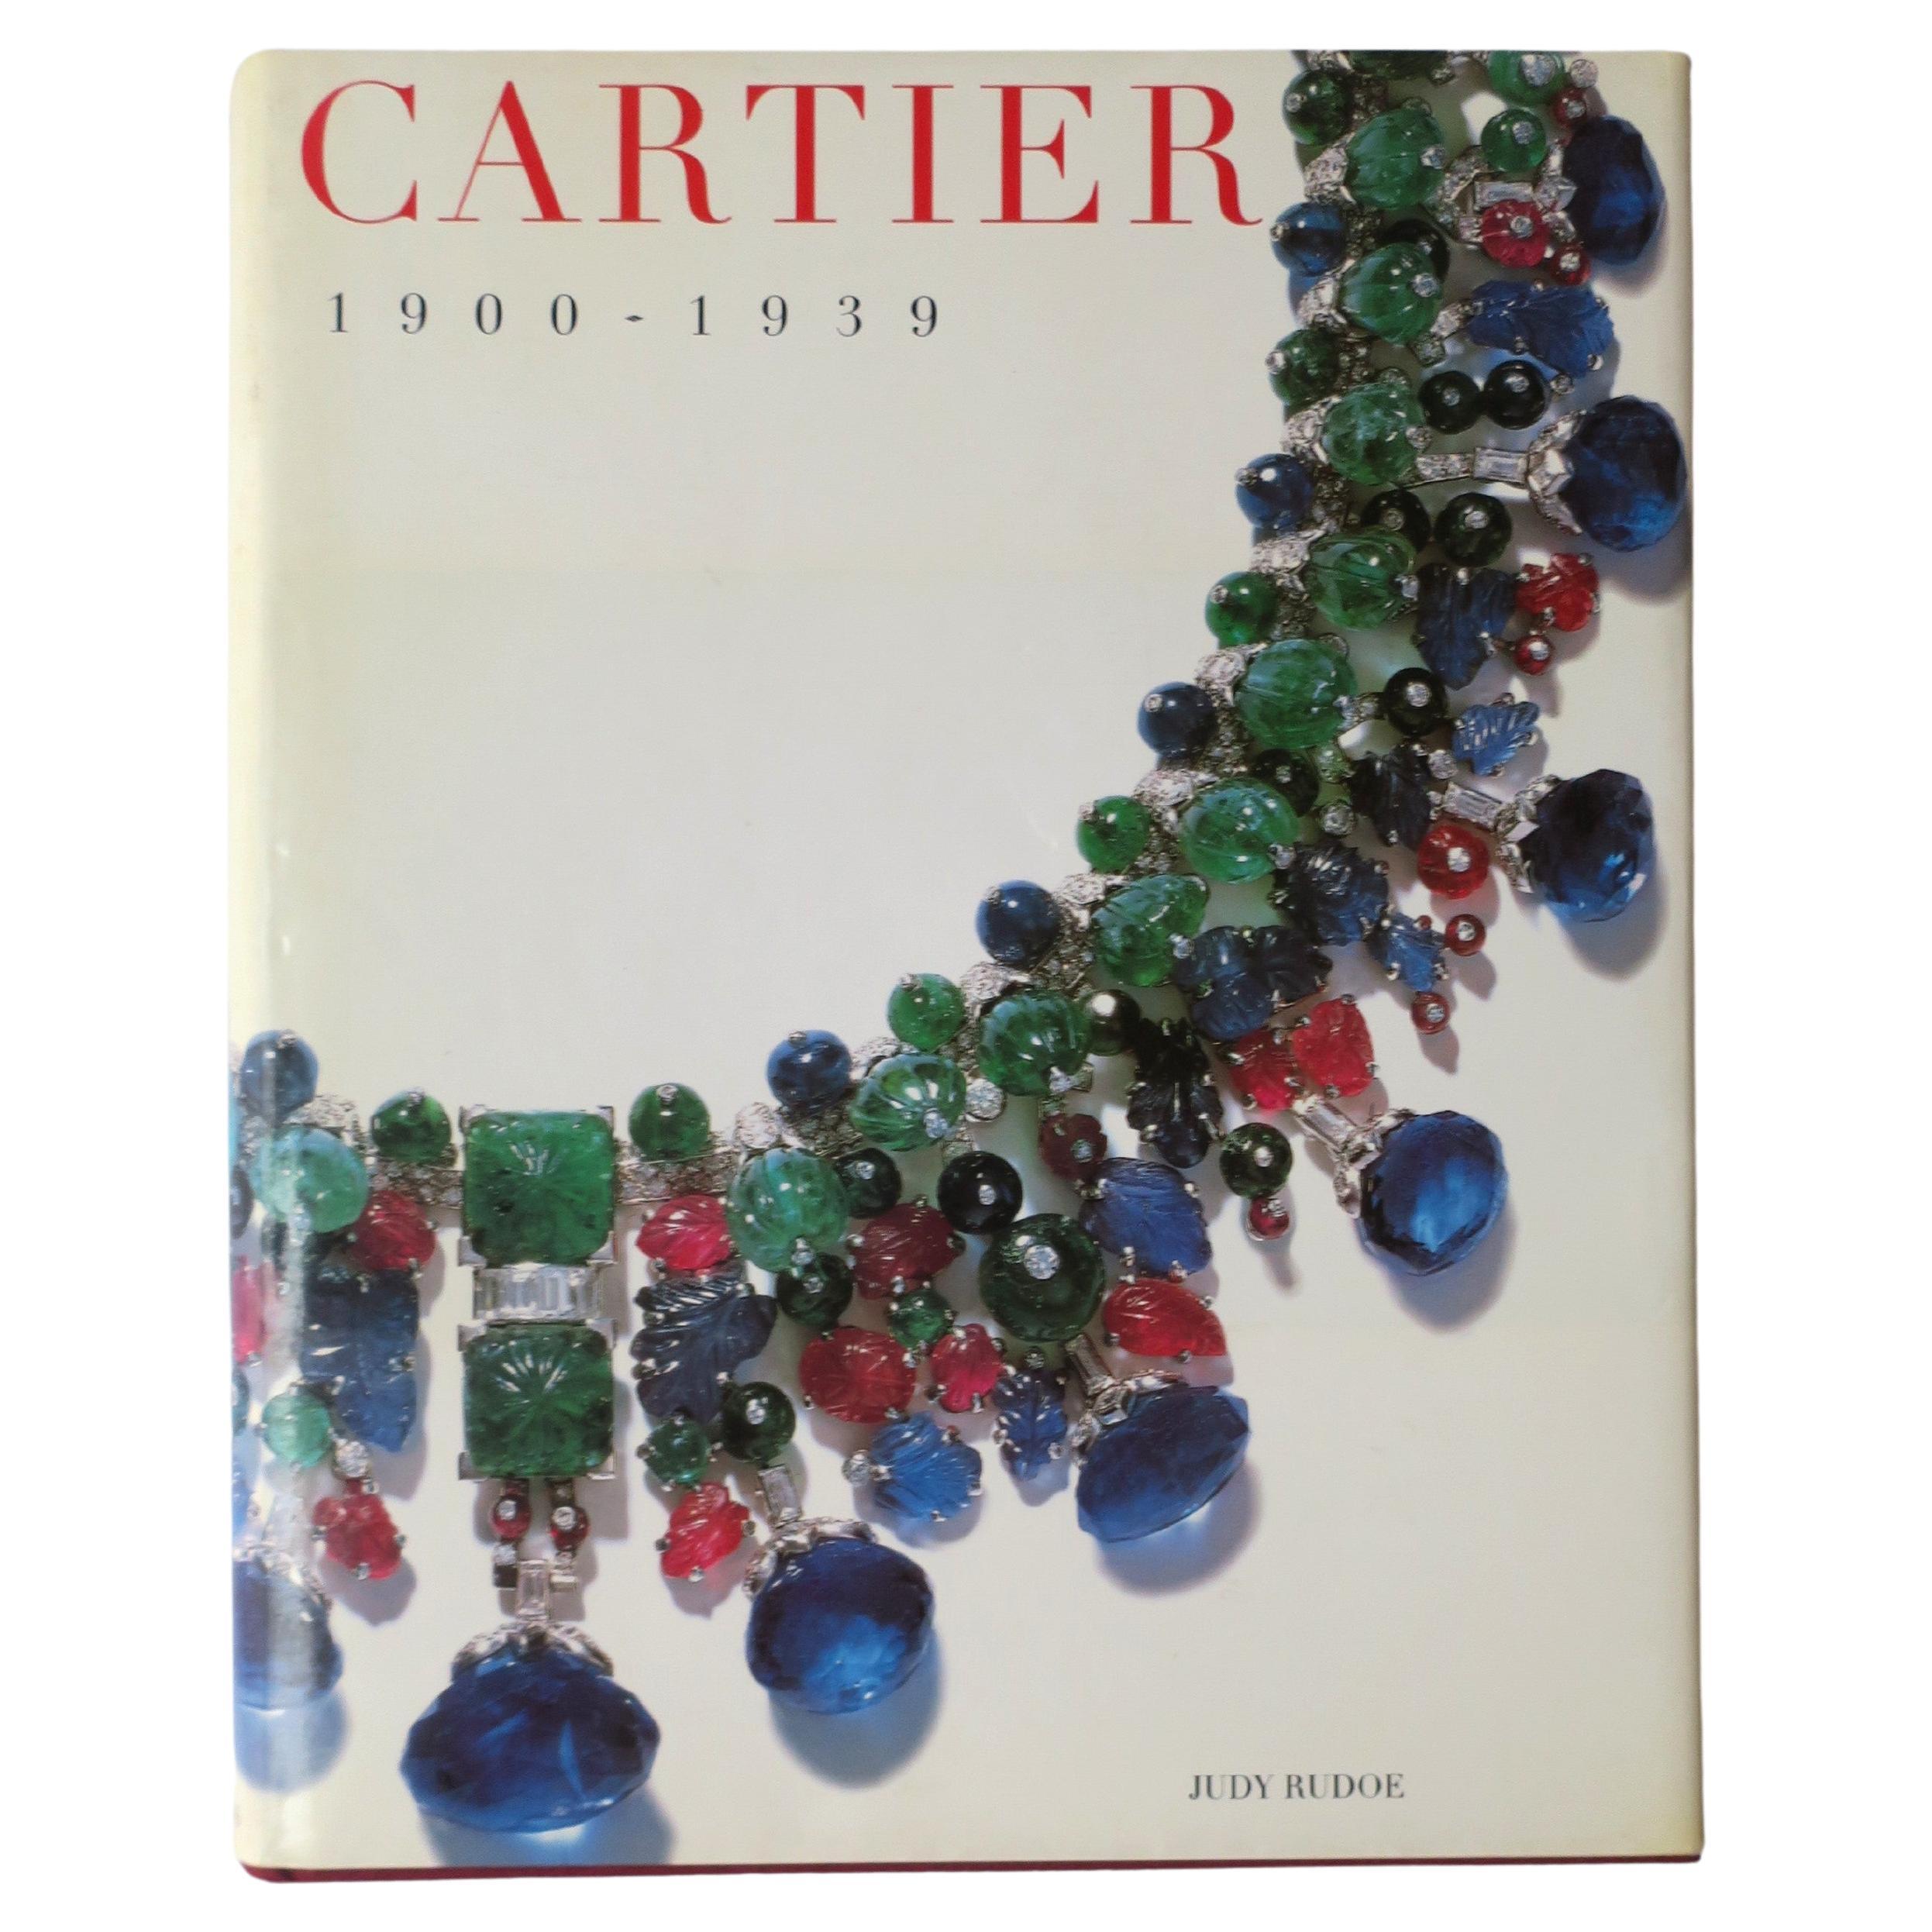 Cartier, Couchtischbuch „High Jewelry Exhibition“, 1997